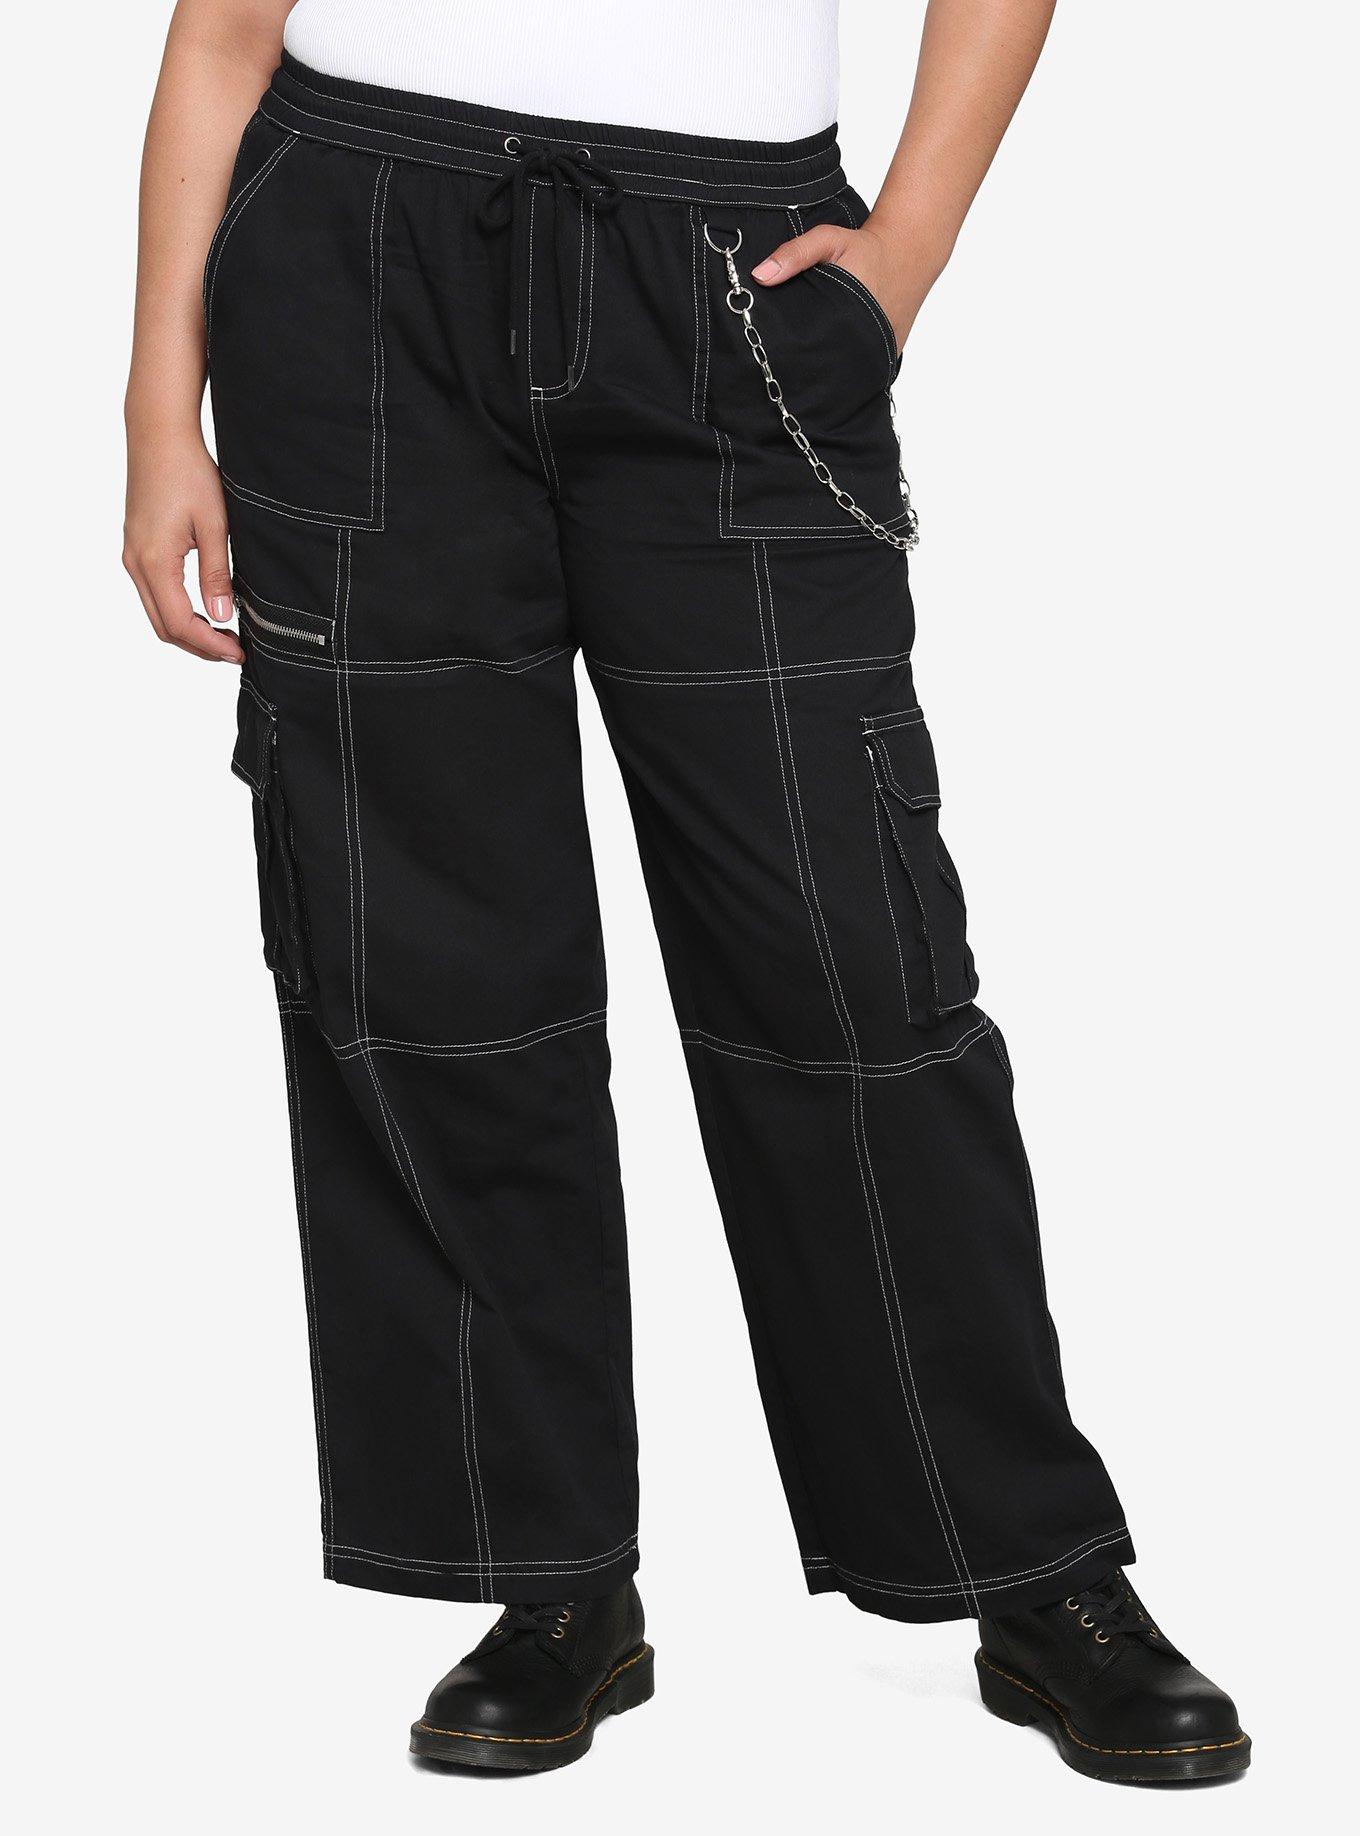 Black & White Stitch Chain Carpenter Pants Plus Size | Hot Topic